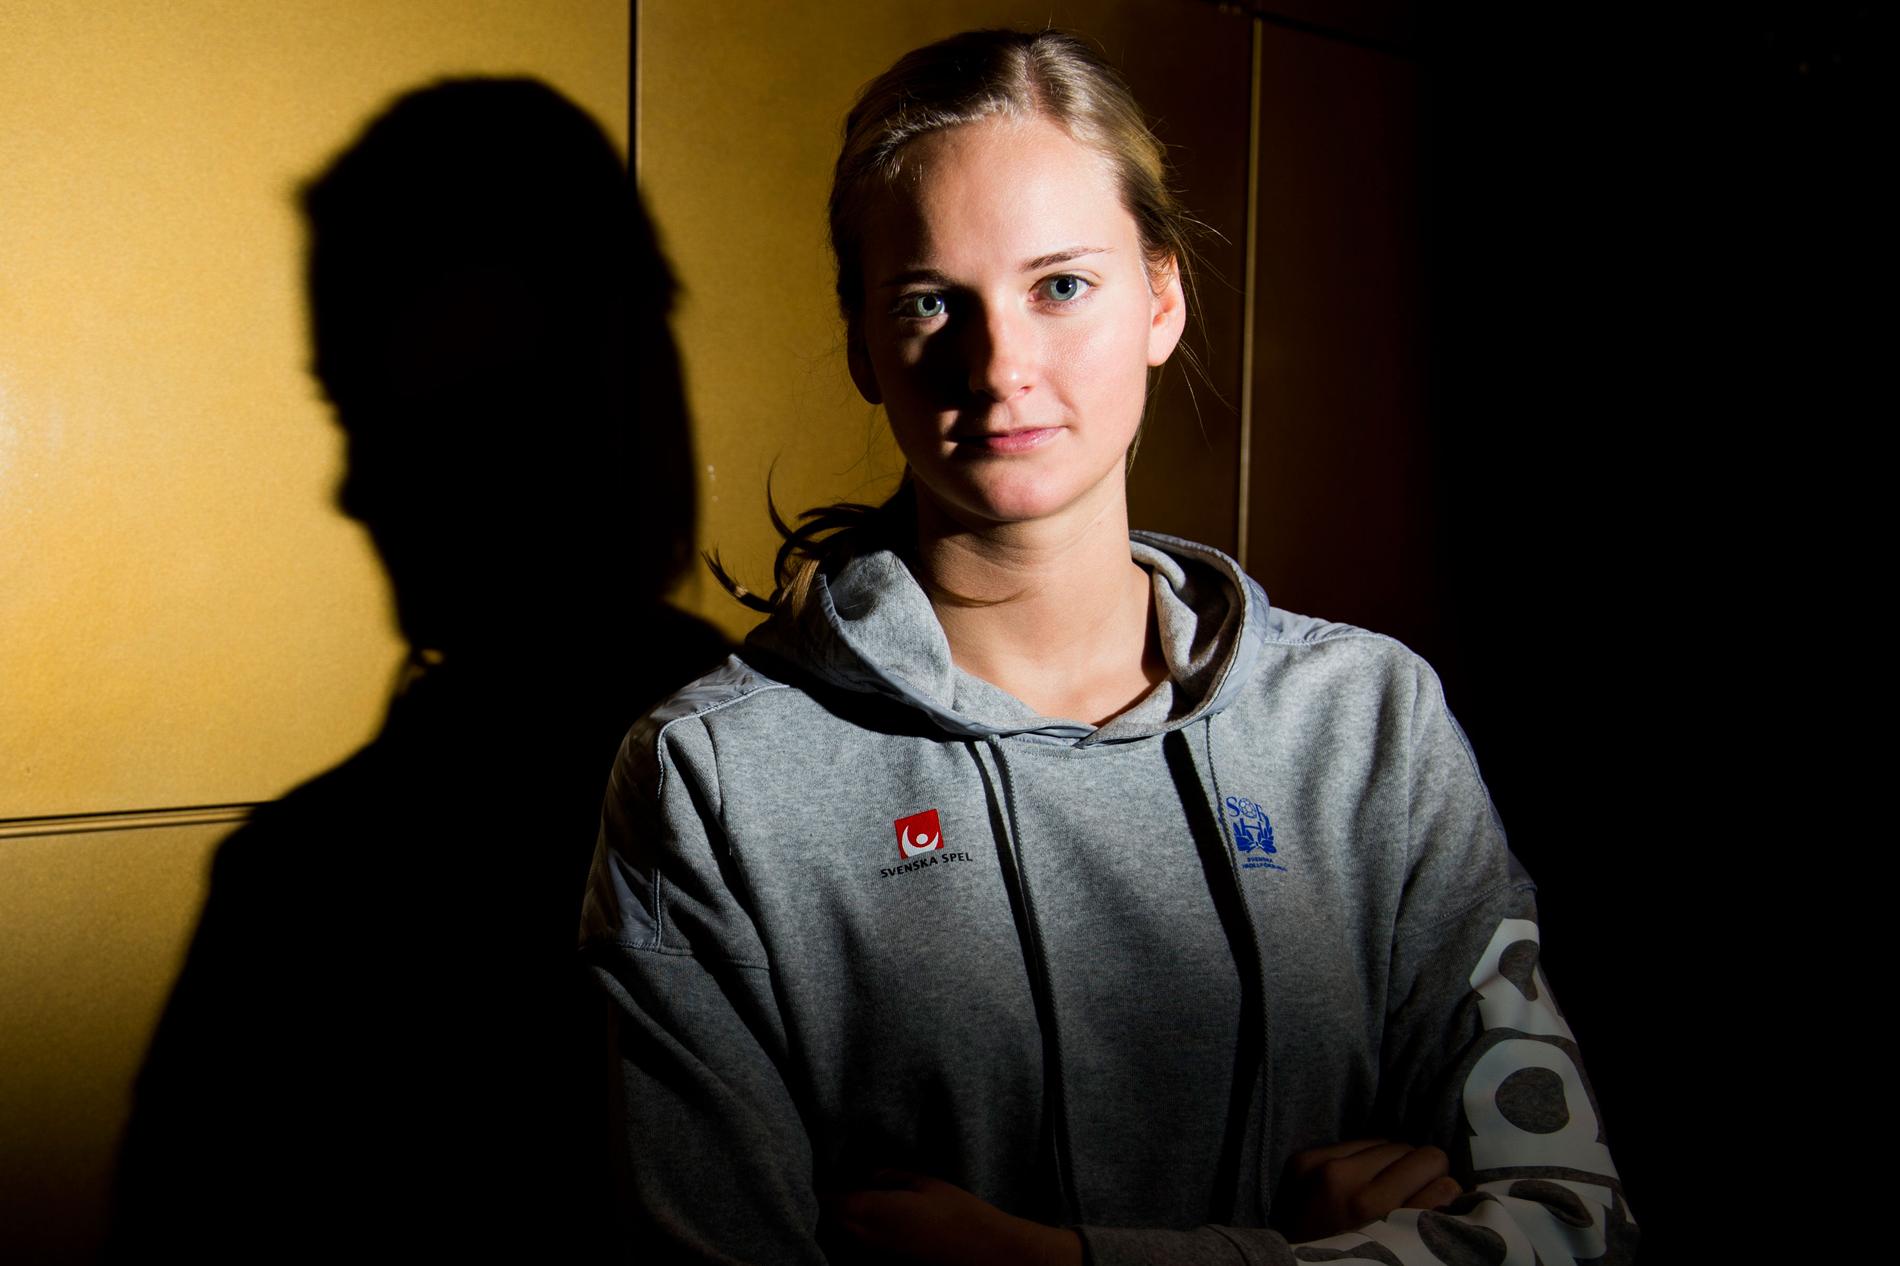 Johanna Bundsen Ålder: 23. Position: Målvakt. Klubb: Sävehof.